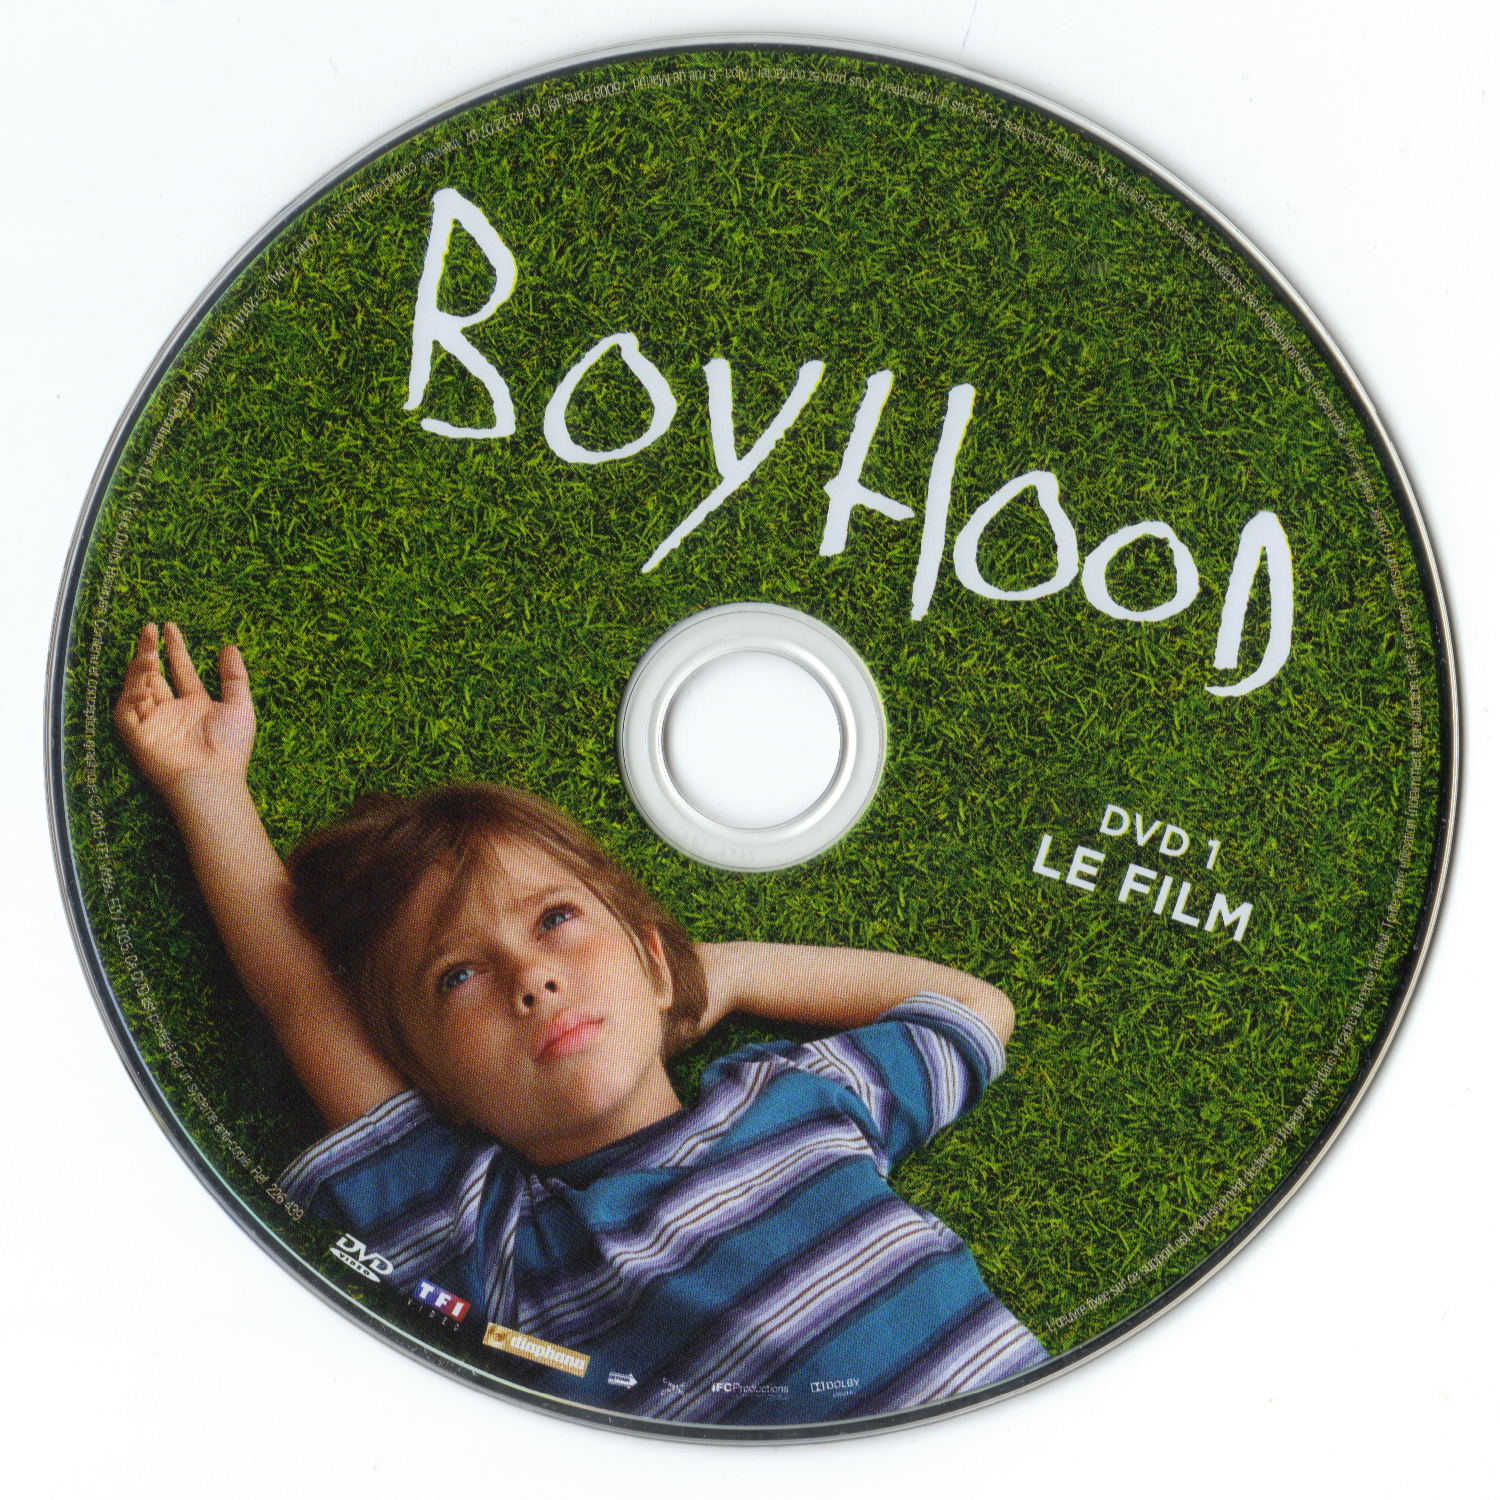 Boyhood DISC 1